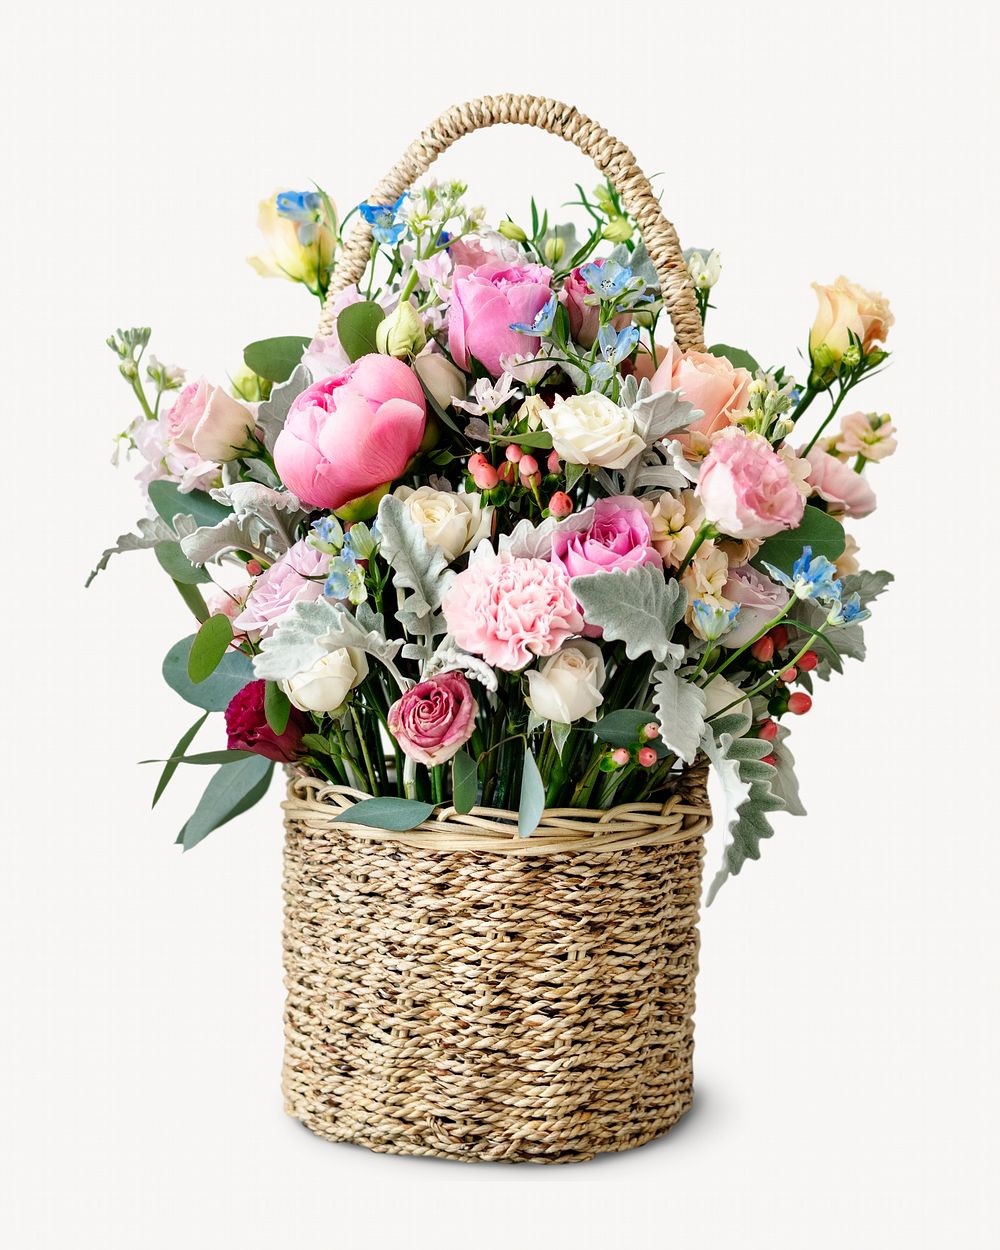 Spring flower basket isolated image